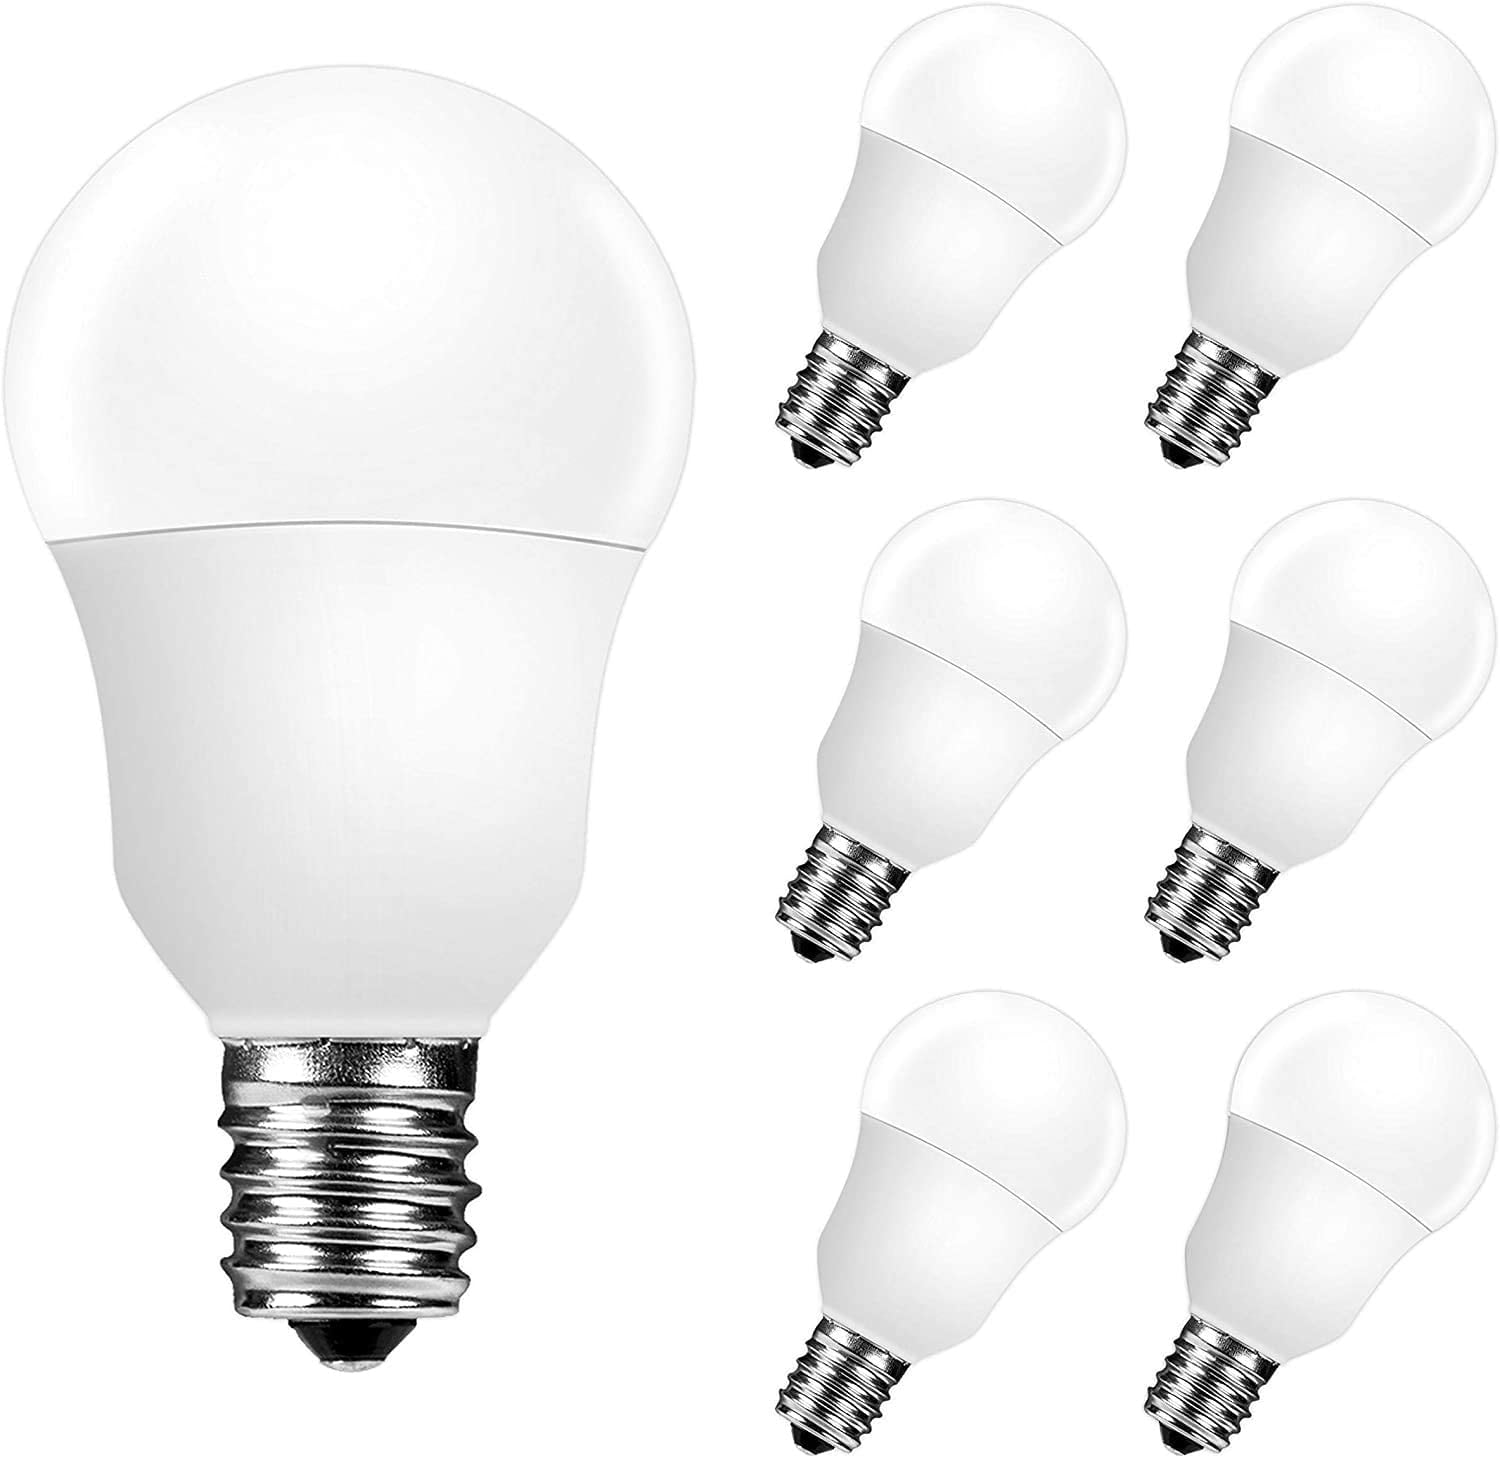 E17 Led Bulb A15 Ceiling Fan Light Bulbs 6w 60 Watt Equivalent Daylight White 5000k Intermediate Base 600 Lumens Not Dimmable 6 Pack Com - Ceiling Fan Light Bulbs Led Daylight